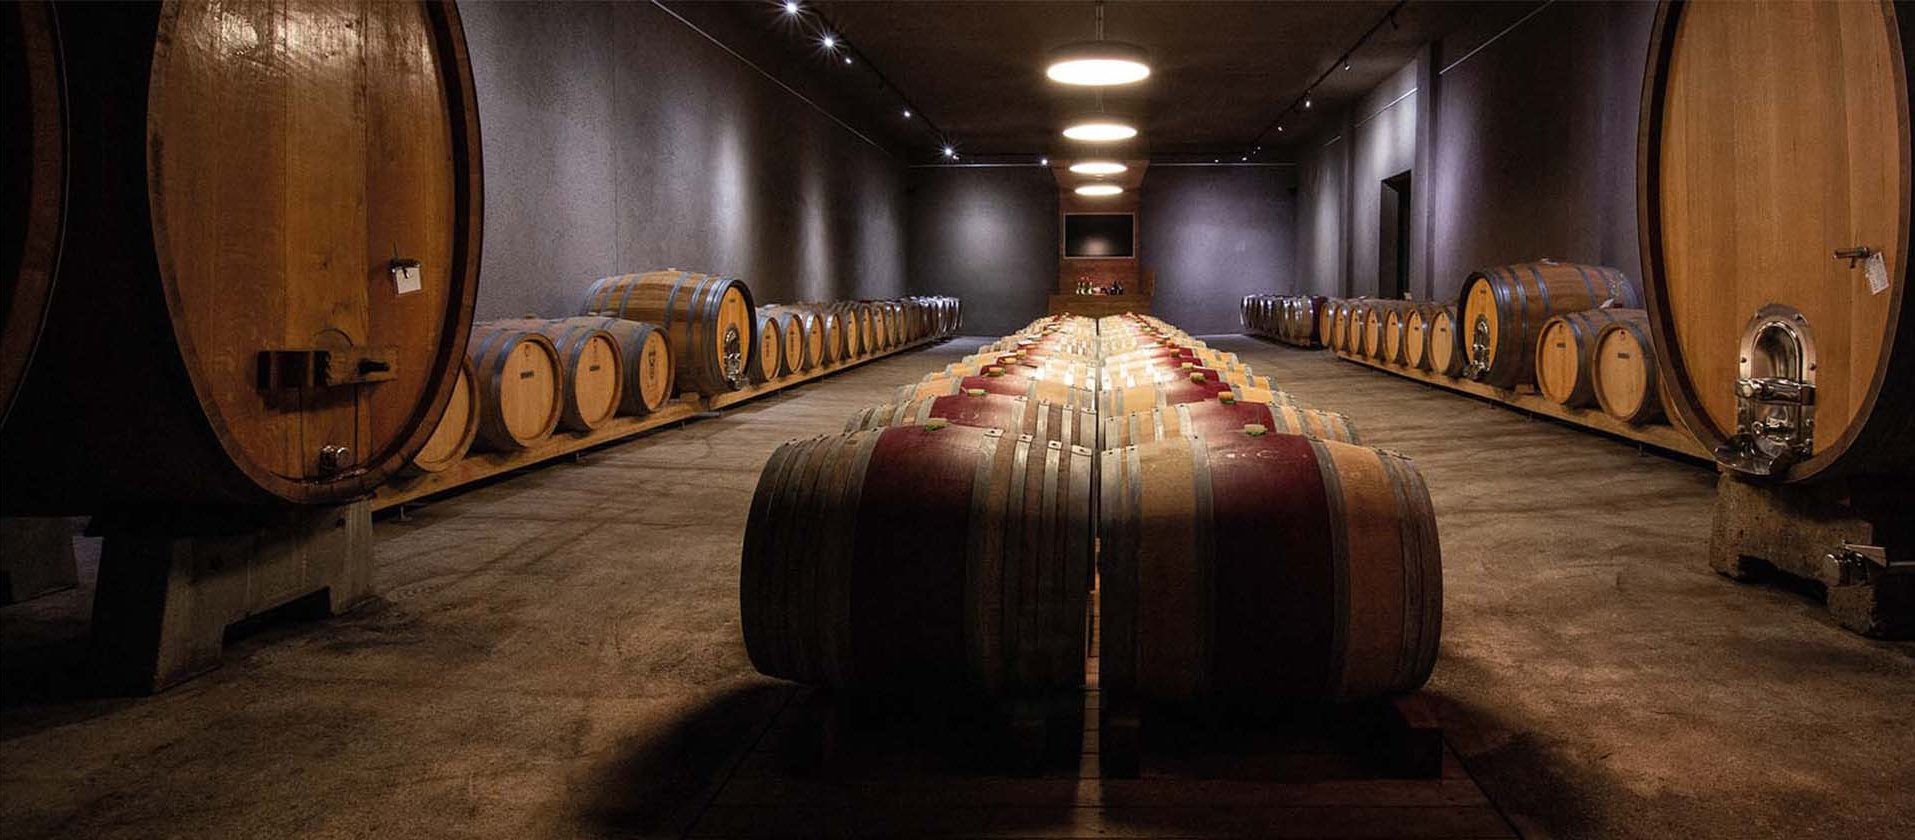 Room full of barrels in the Digital wine press hall kitzingen